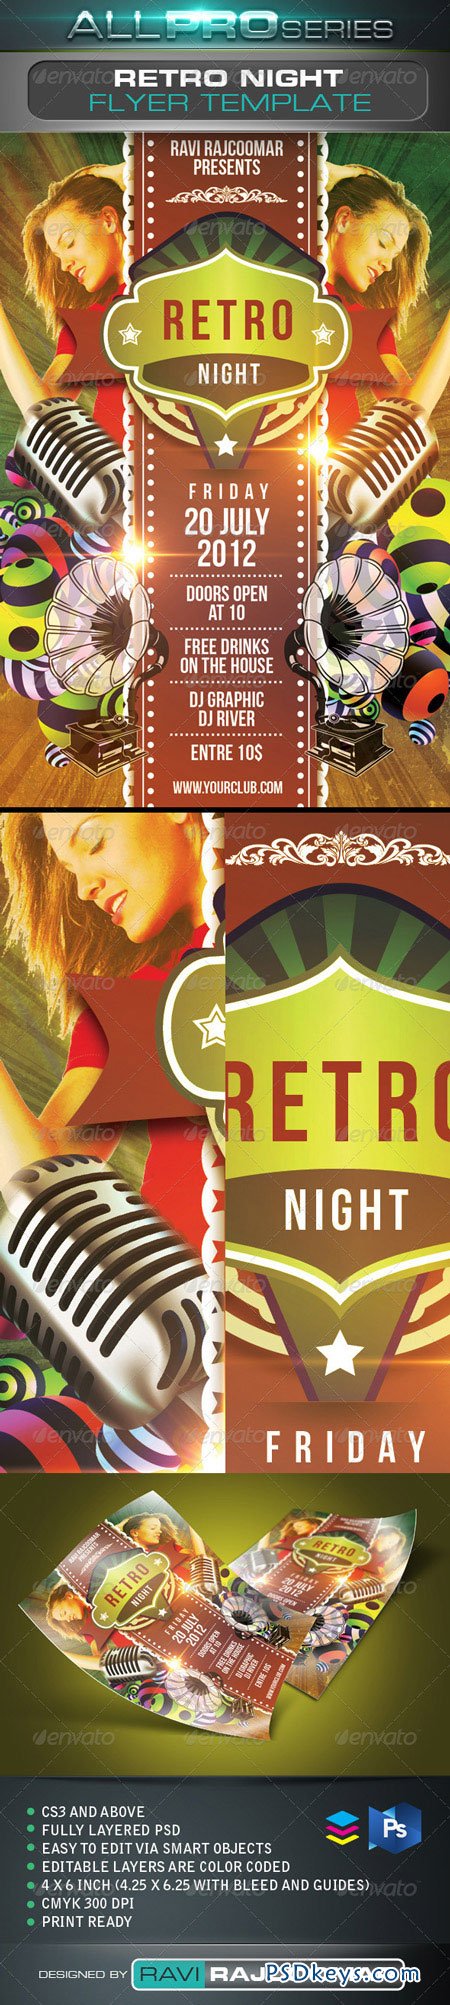 Retro Night Flyer Template 2641693